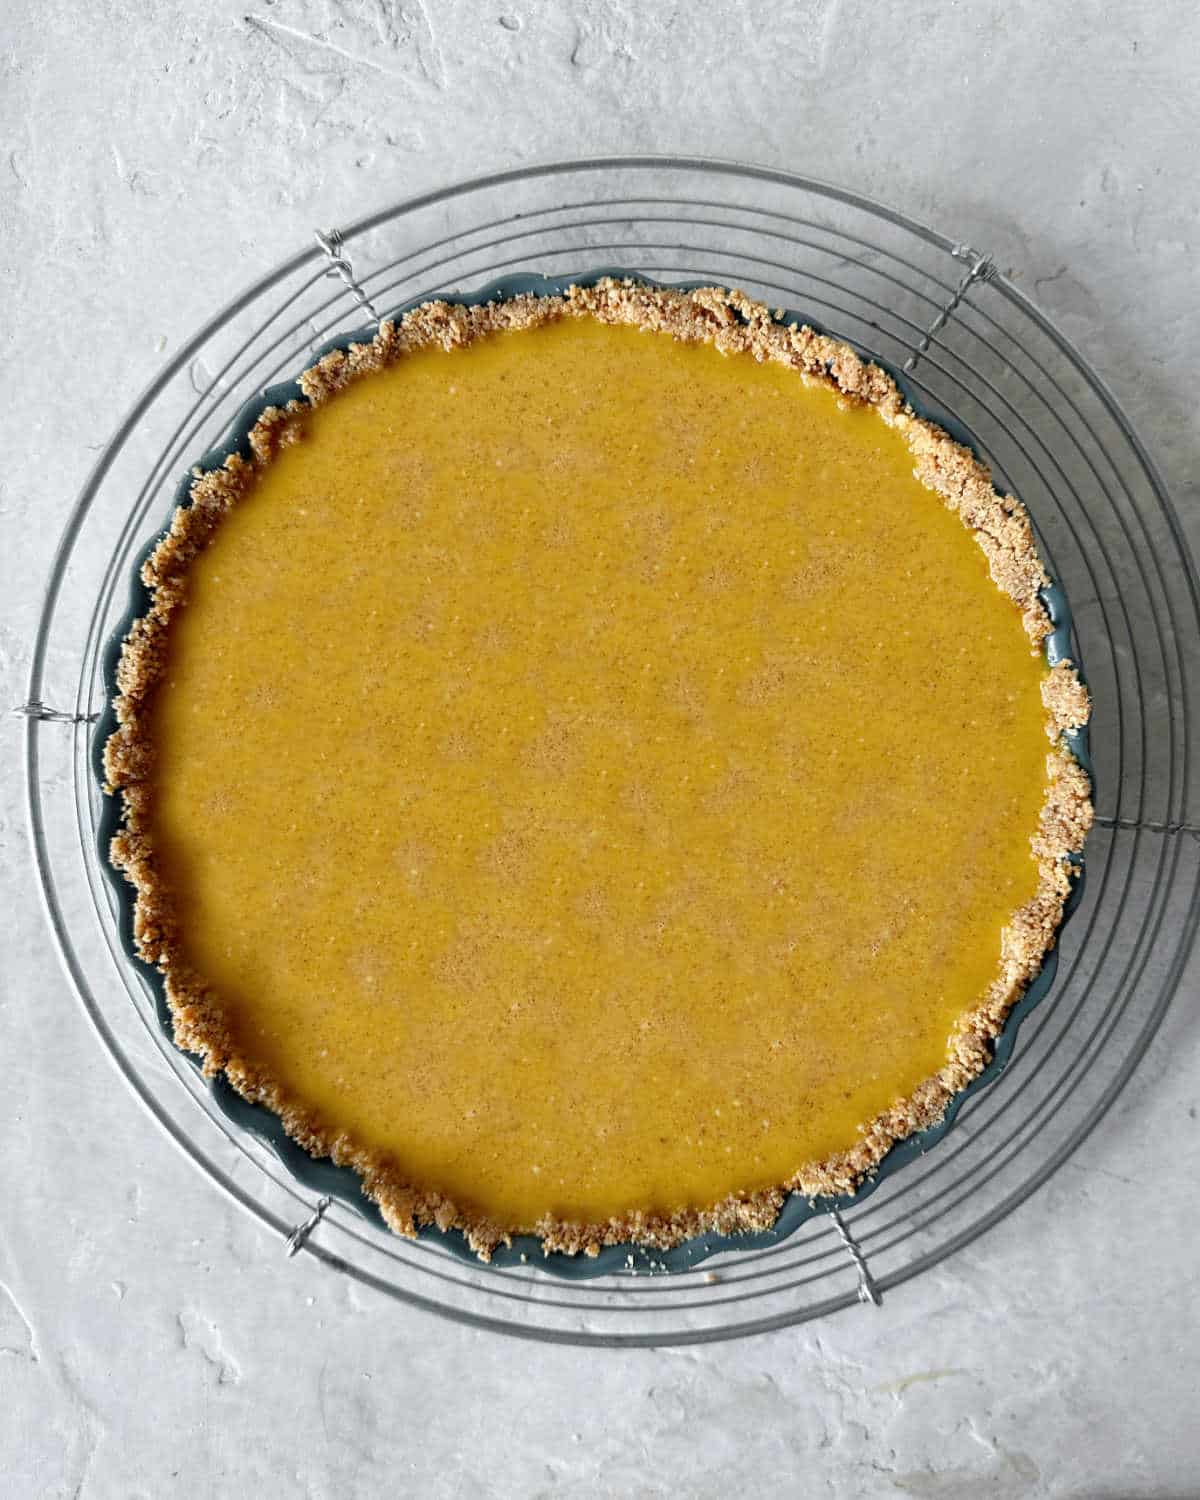 Top view of pumpkin custard pie before baking on a wire rack. Light grey surface.